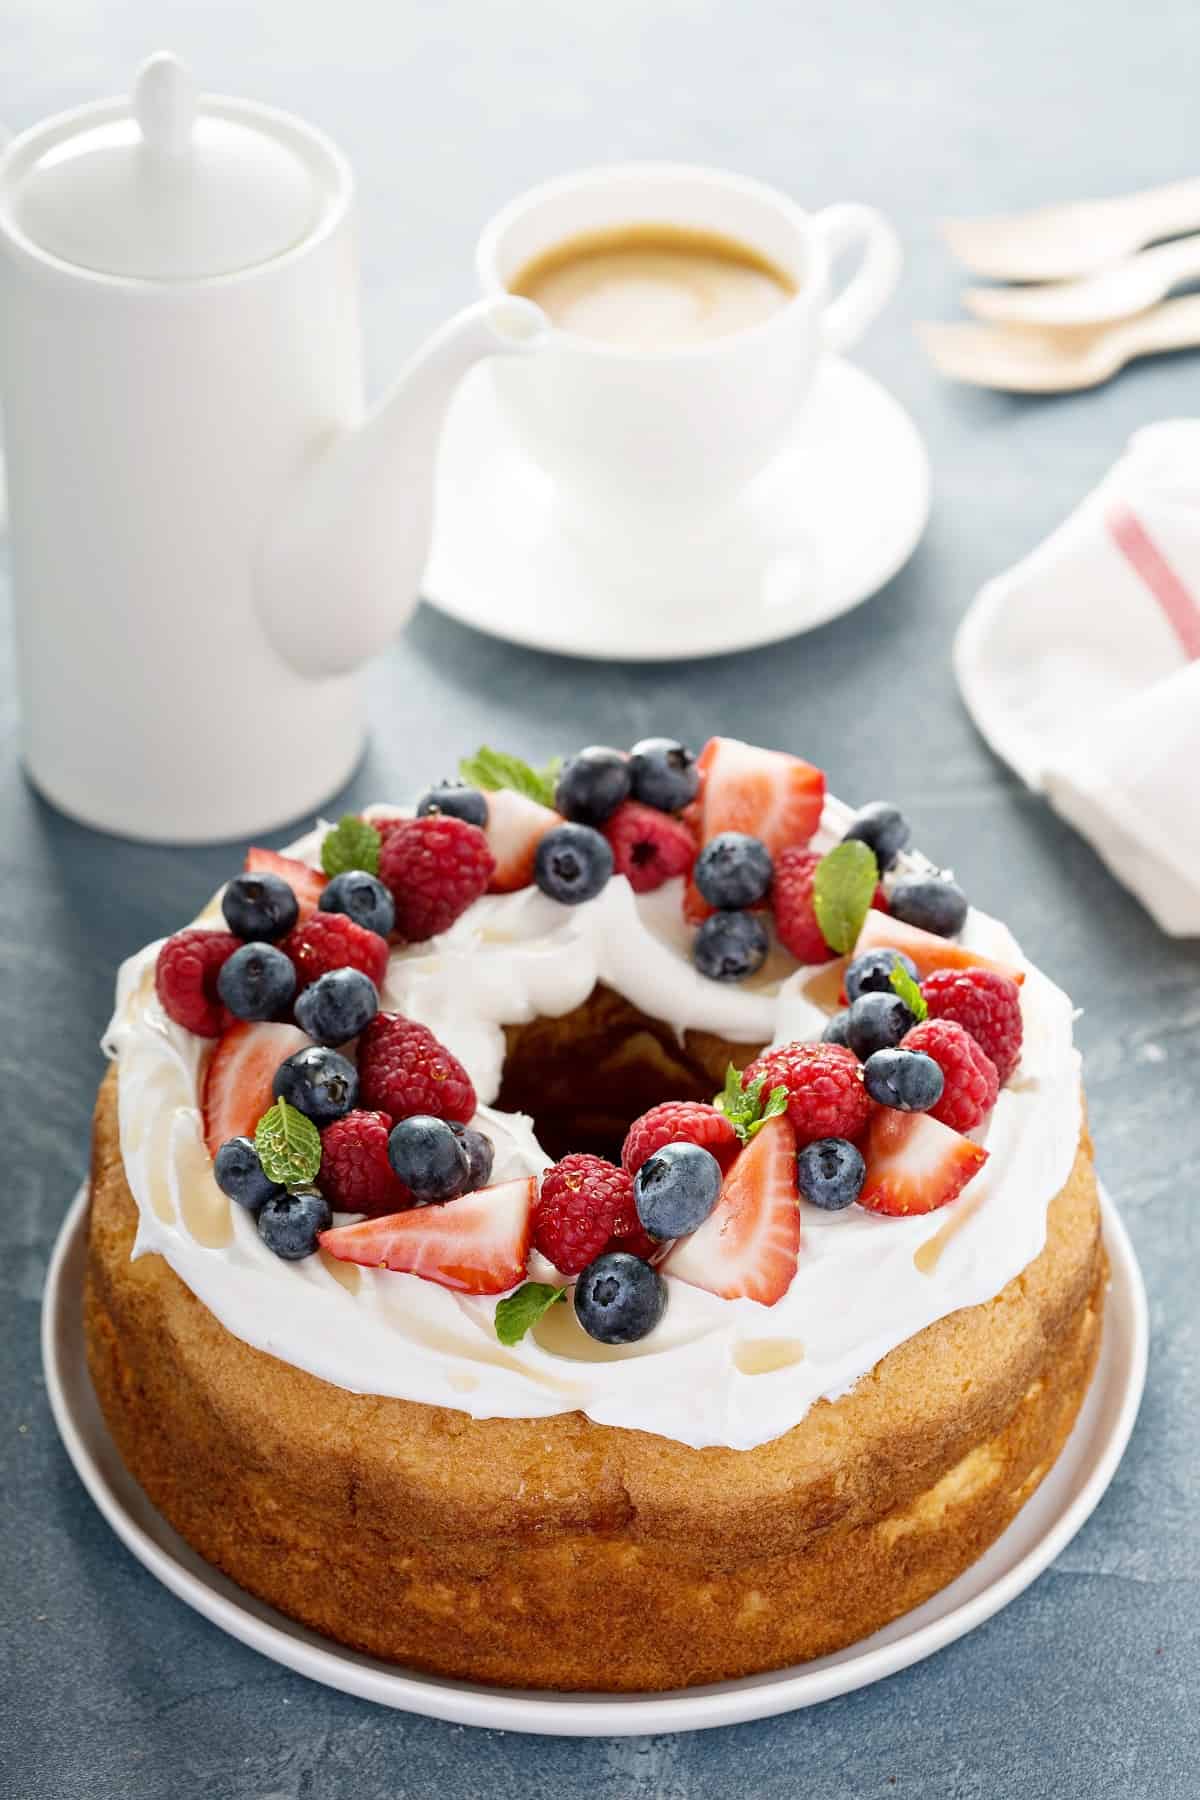 Whipped cream and fruit on bundt cake.